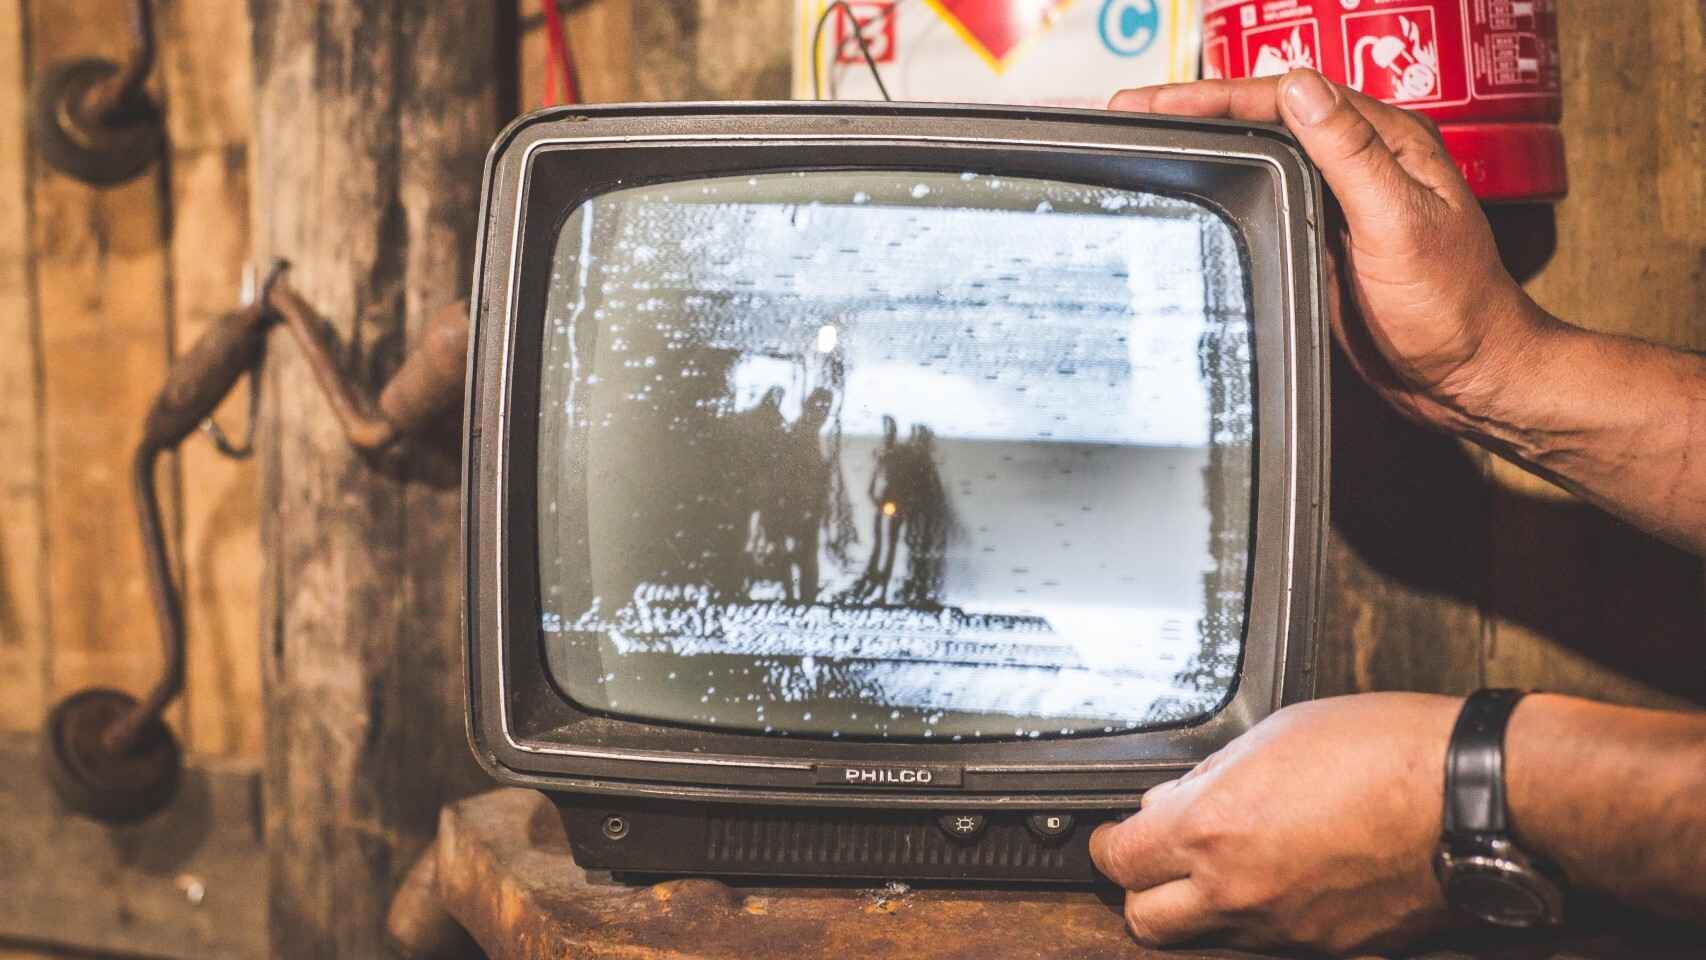 Televisión antigua